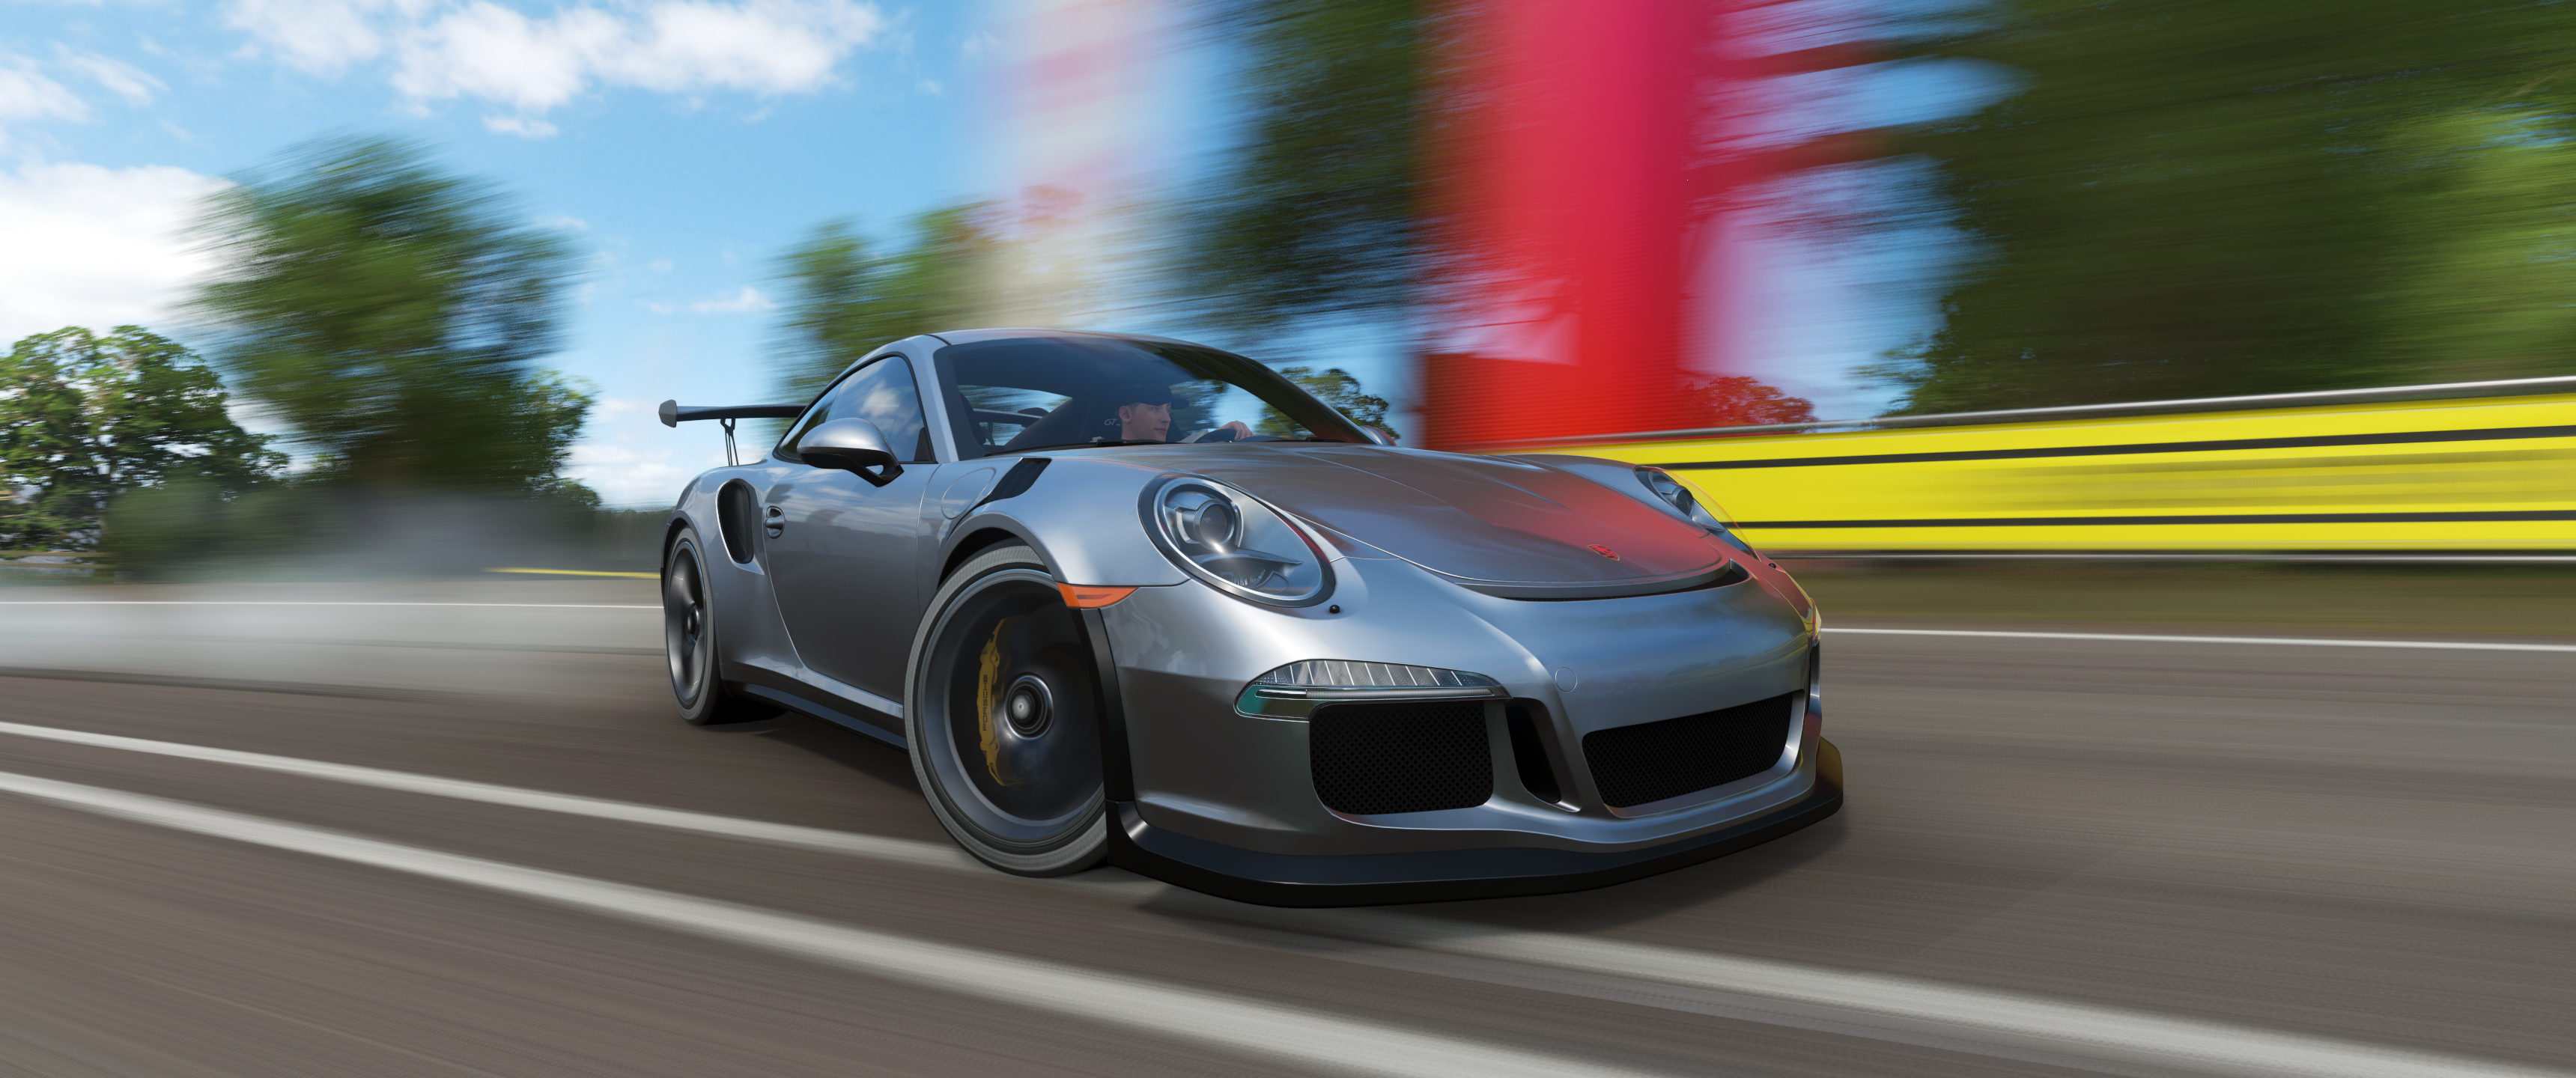 General 3440x1440 Forza Horizon 4 video games Porsche Porsche 911 German cars Volkswagen Group PlaygroundGames Turn 10 Studios Xbox Game Studios